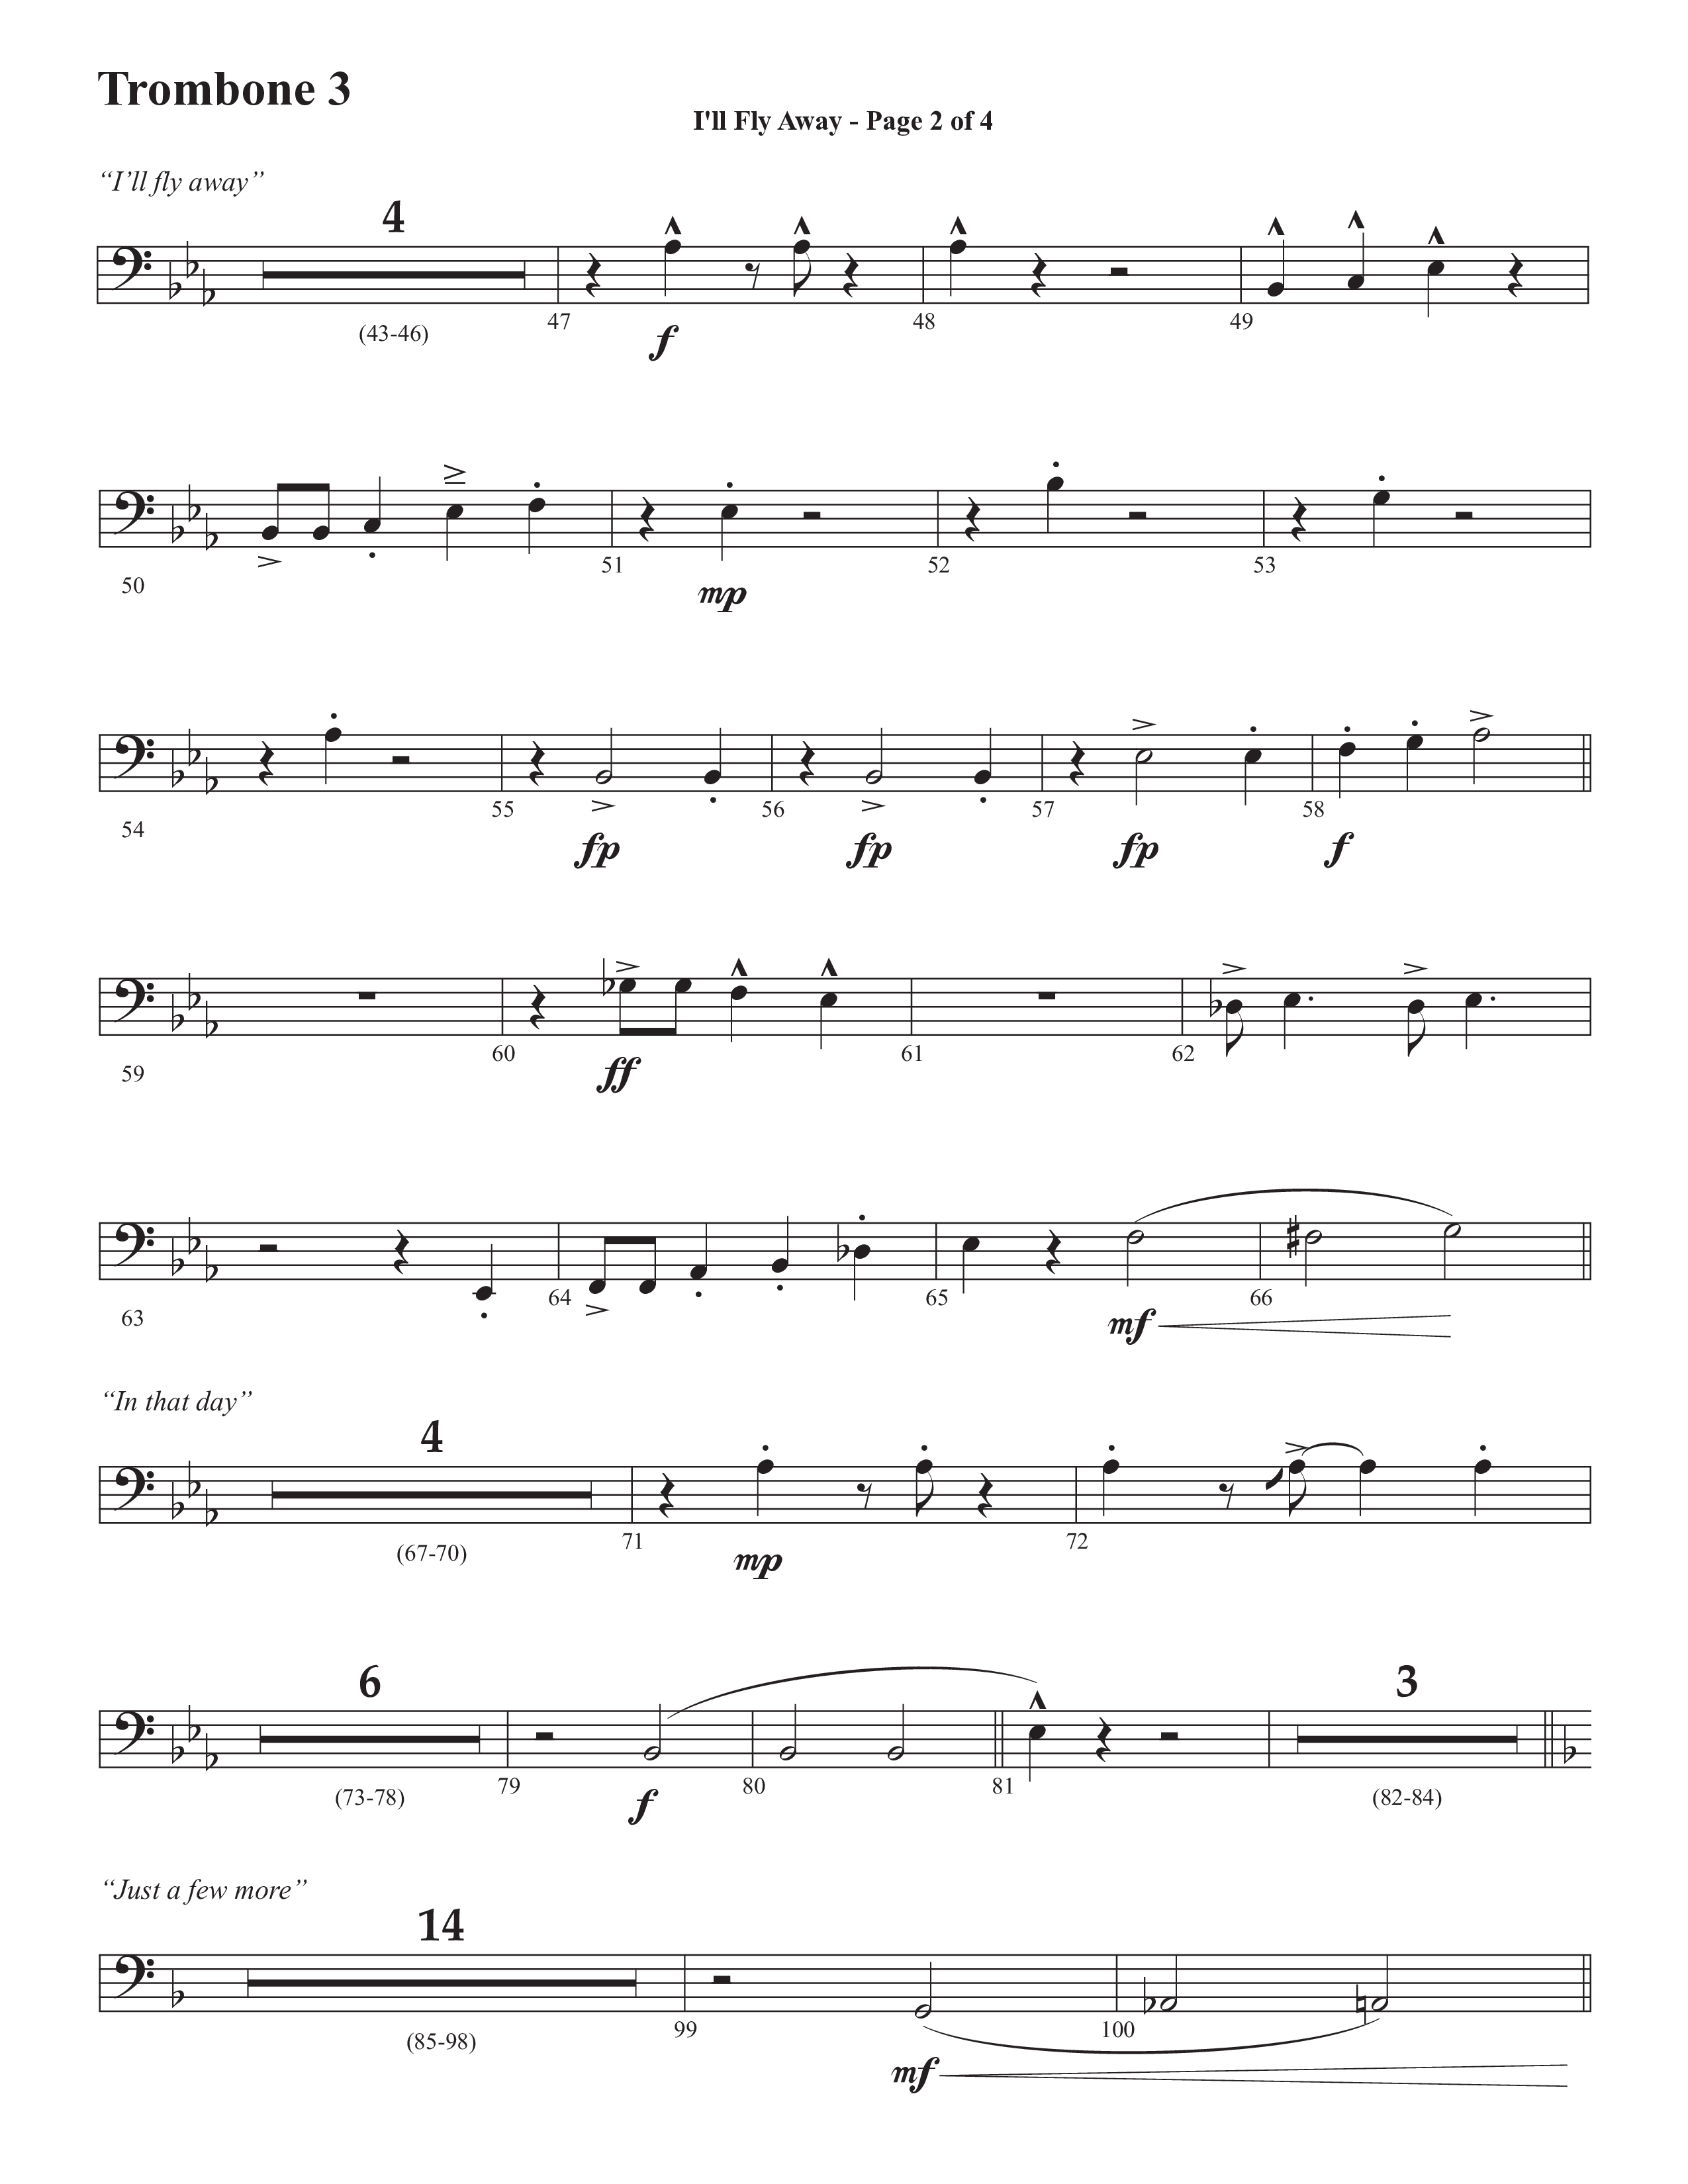 I'll Fly Away (Choral Anthem SATB) Trombone 3 (Semsen Music / Arr. Michael Lee)